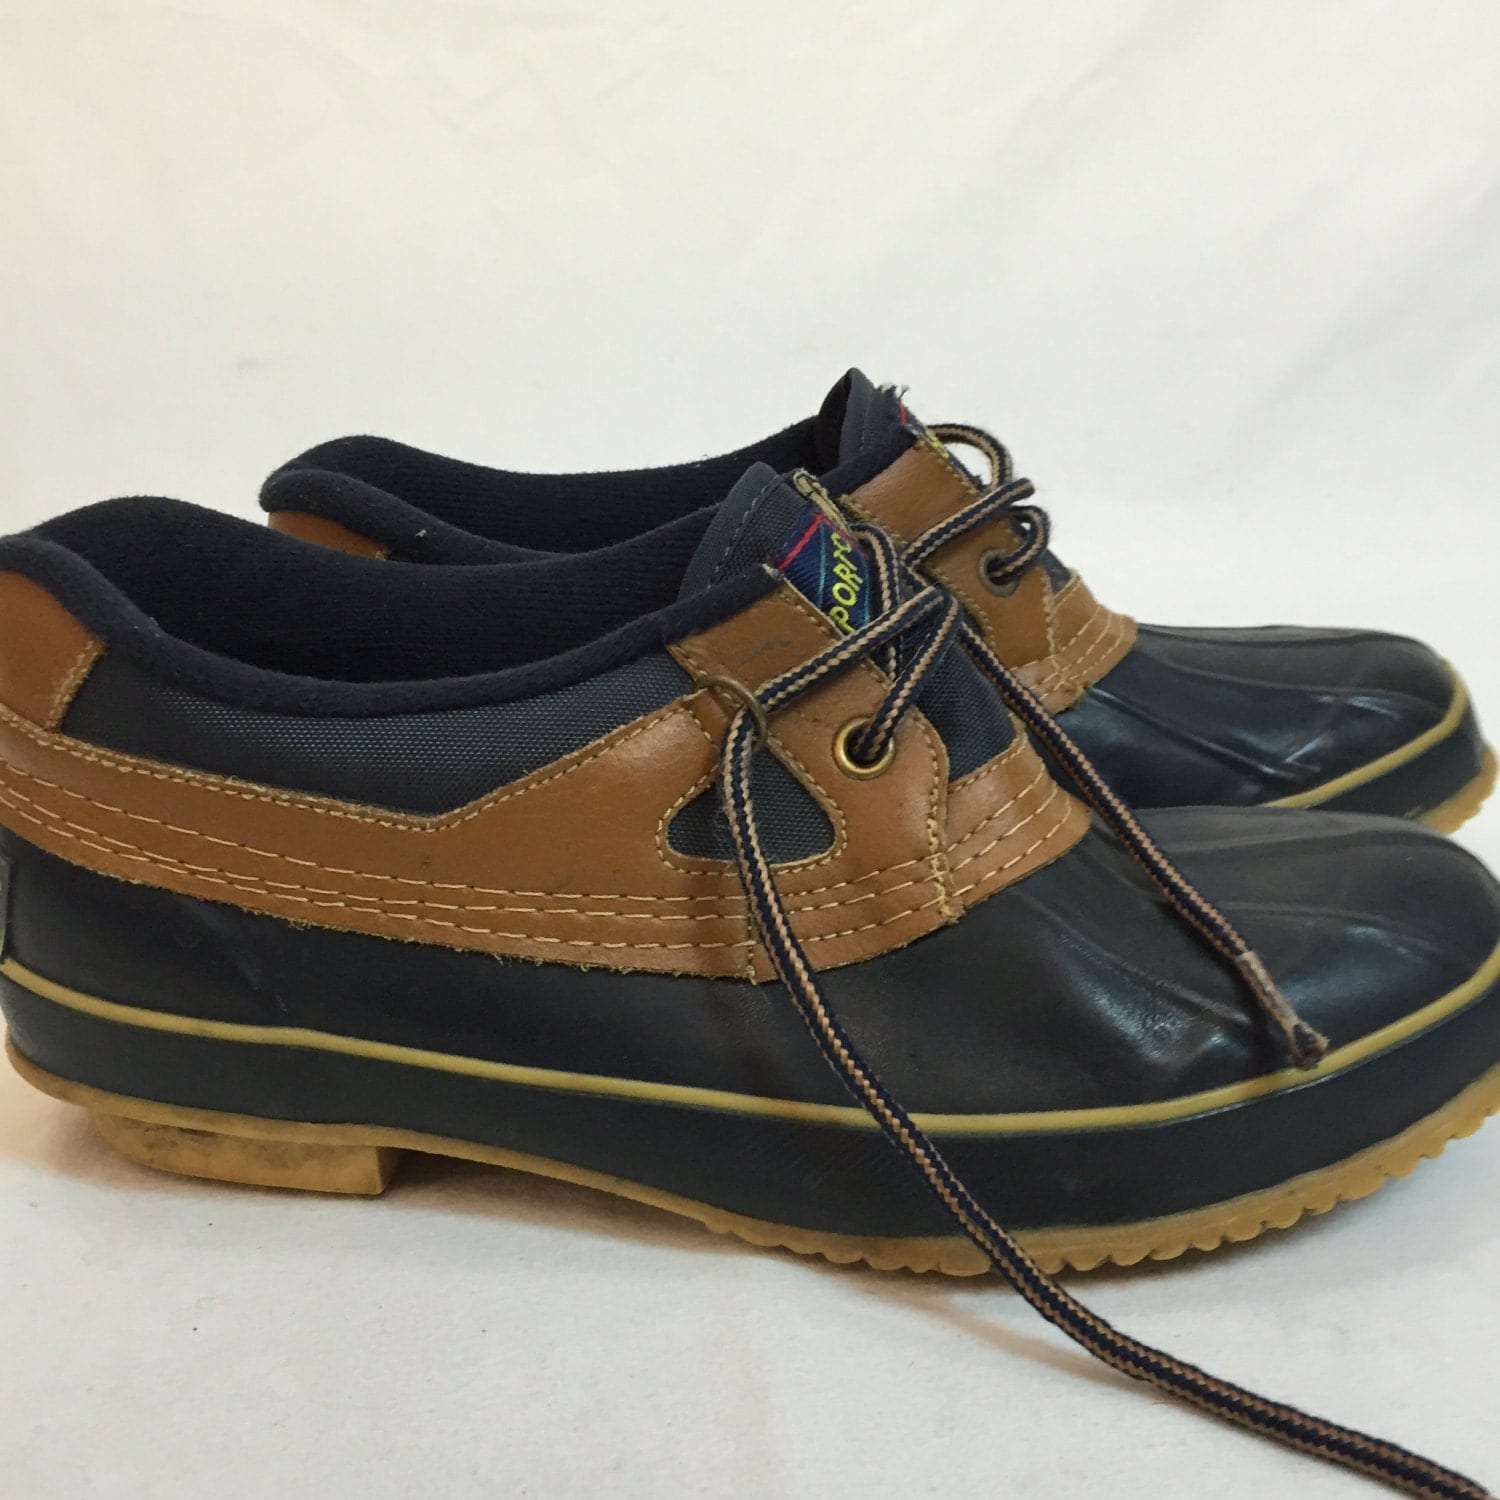 Vintage Sporto Duck Boots Men's size 8 Two eyelet